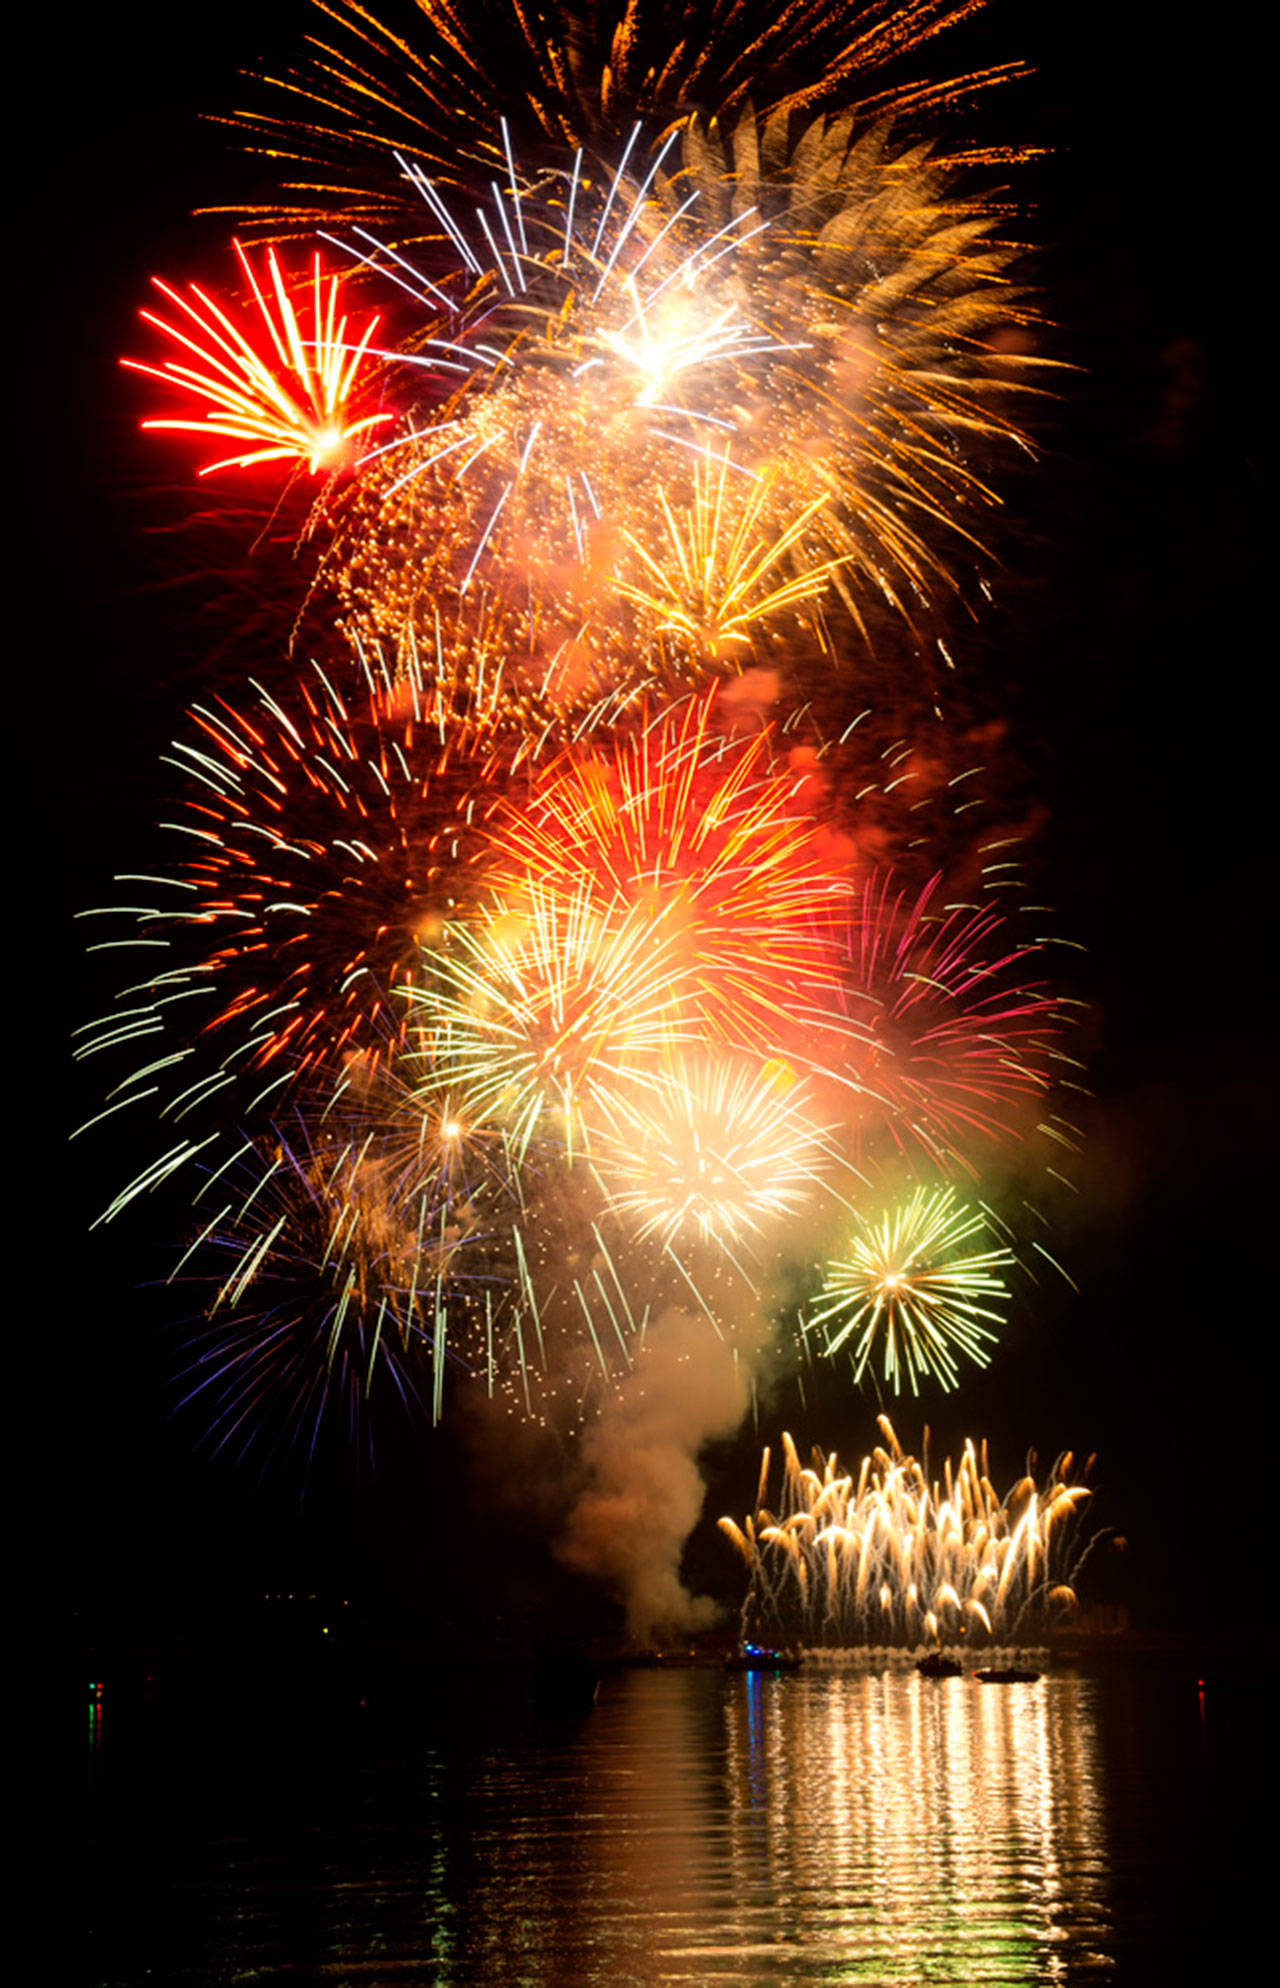 Pyrotechnics and patriotism on the Fourth of July Bainbridge Island